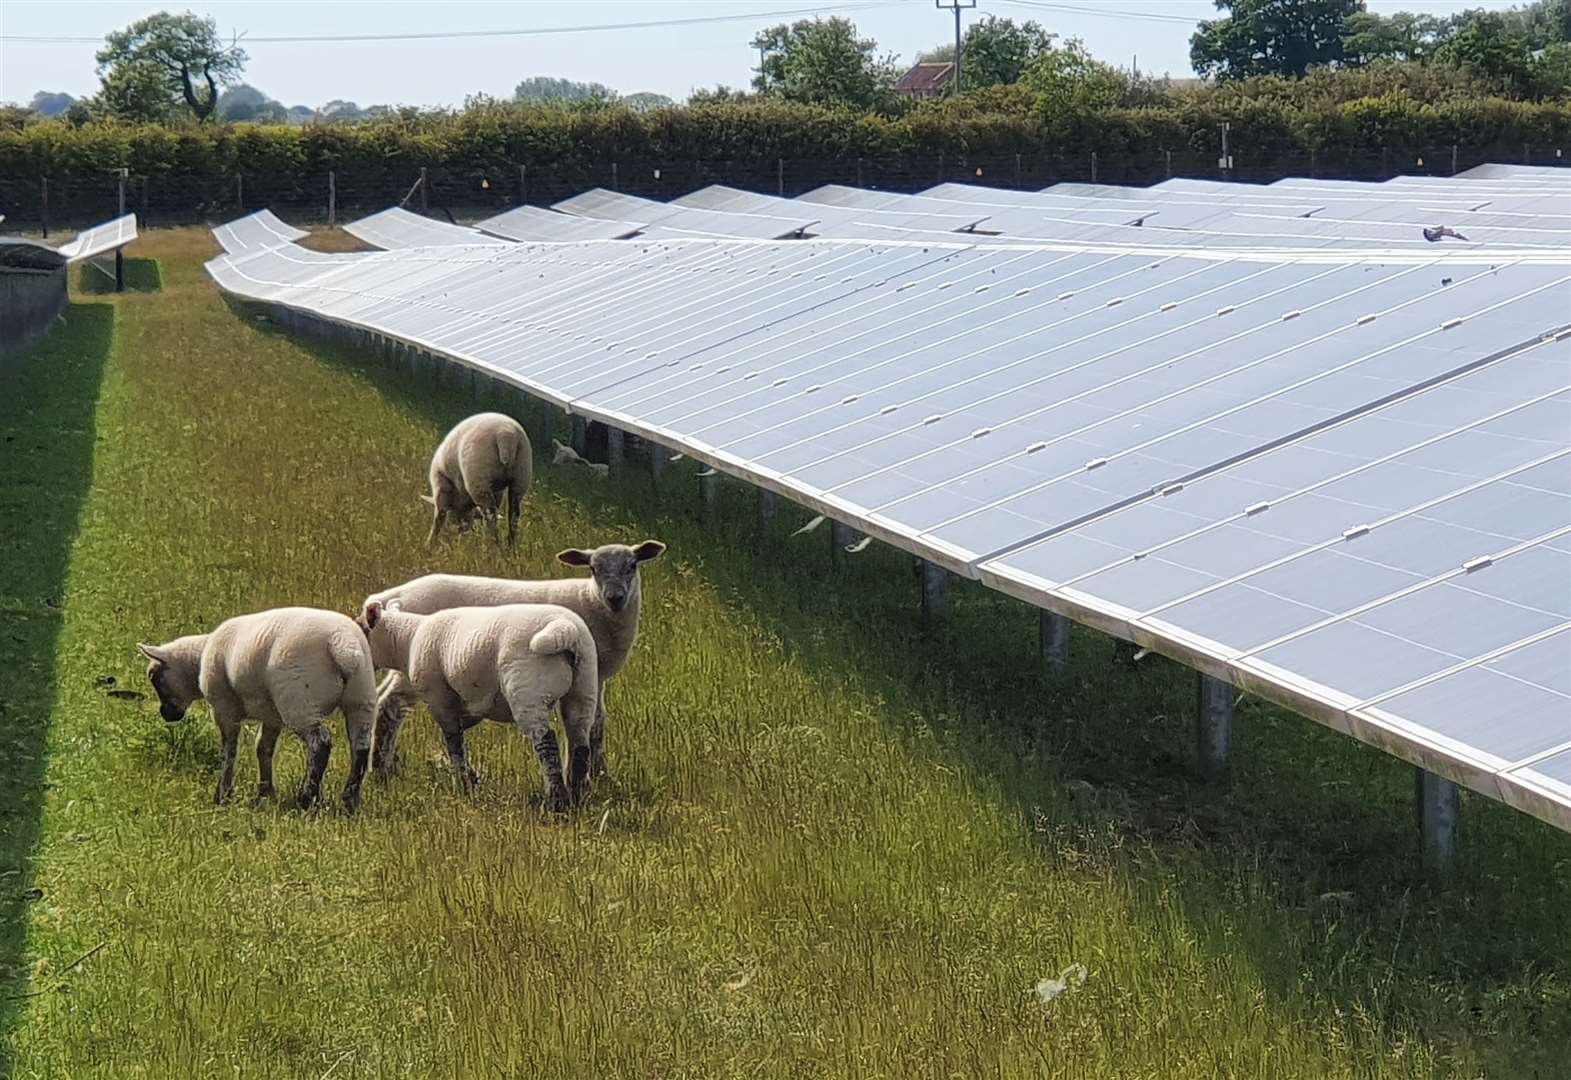 Plans emerge for huge new solar farm